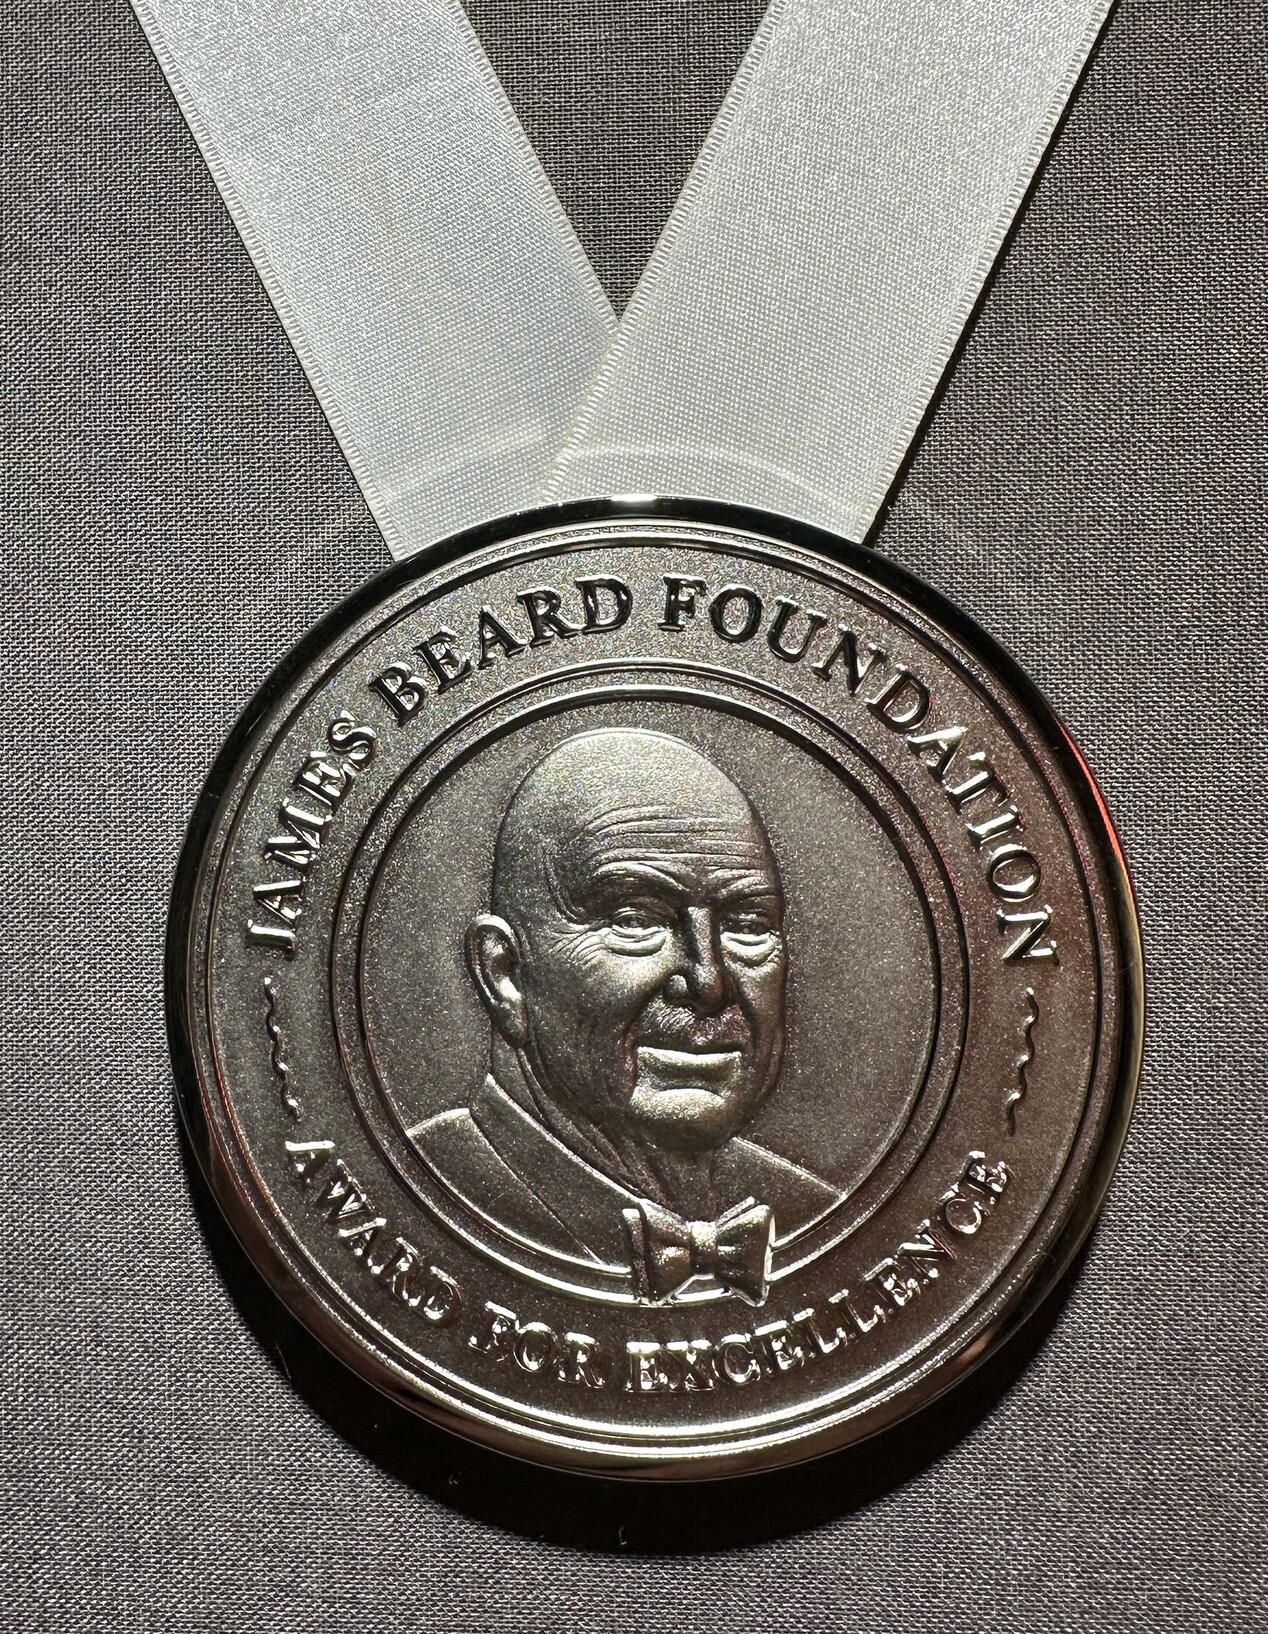 James Beard Award medal for Excellence